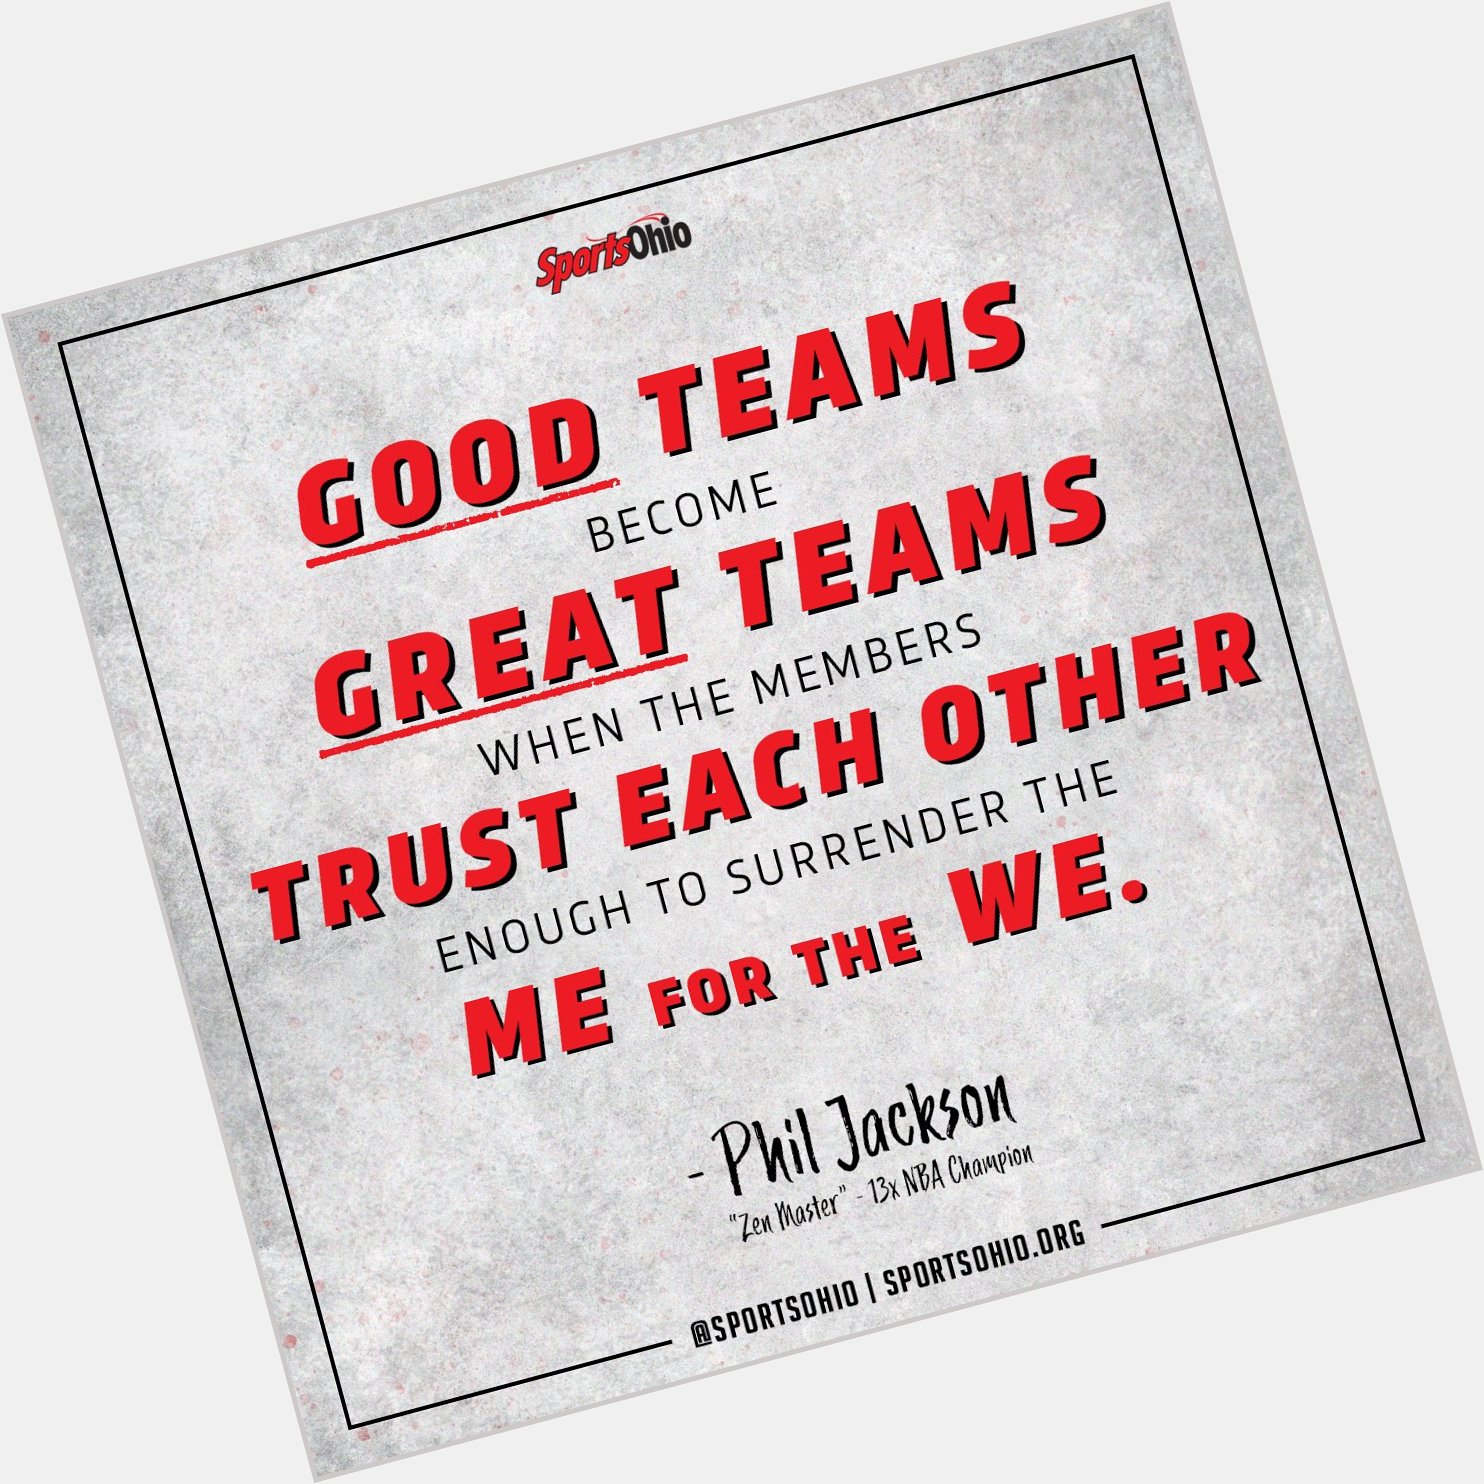   courtesy of coaching legend, Phil Jackson.

Happy birthday, Phil! 